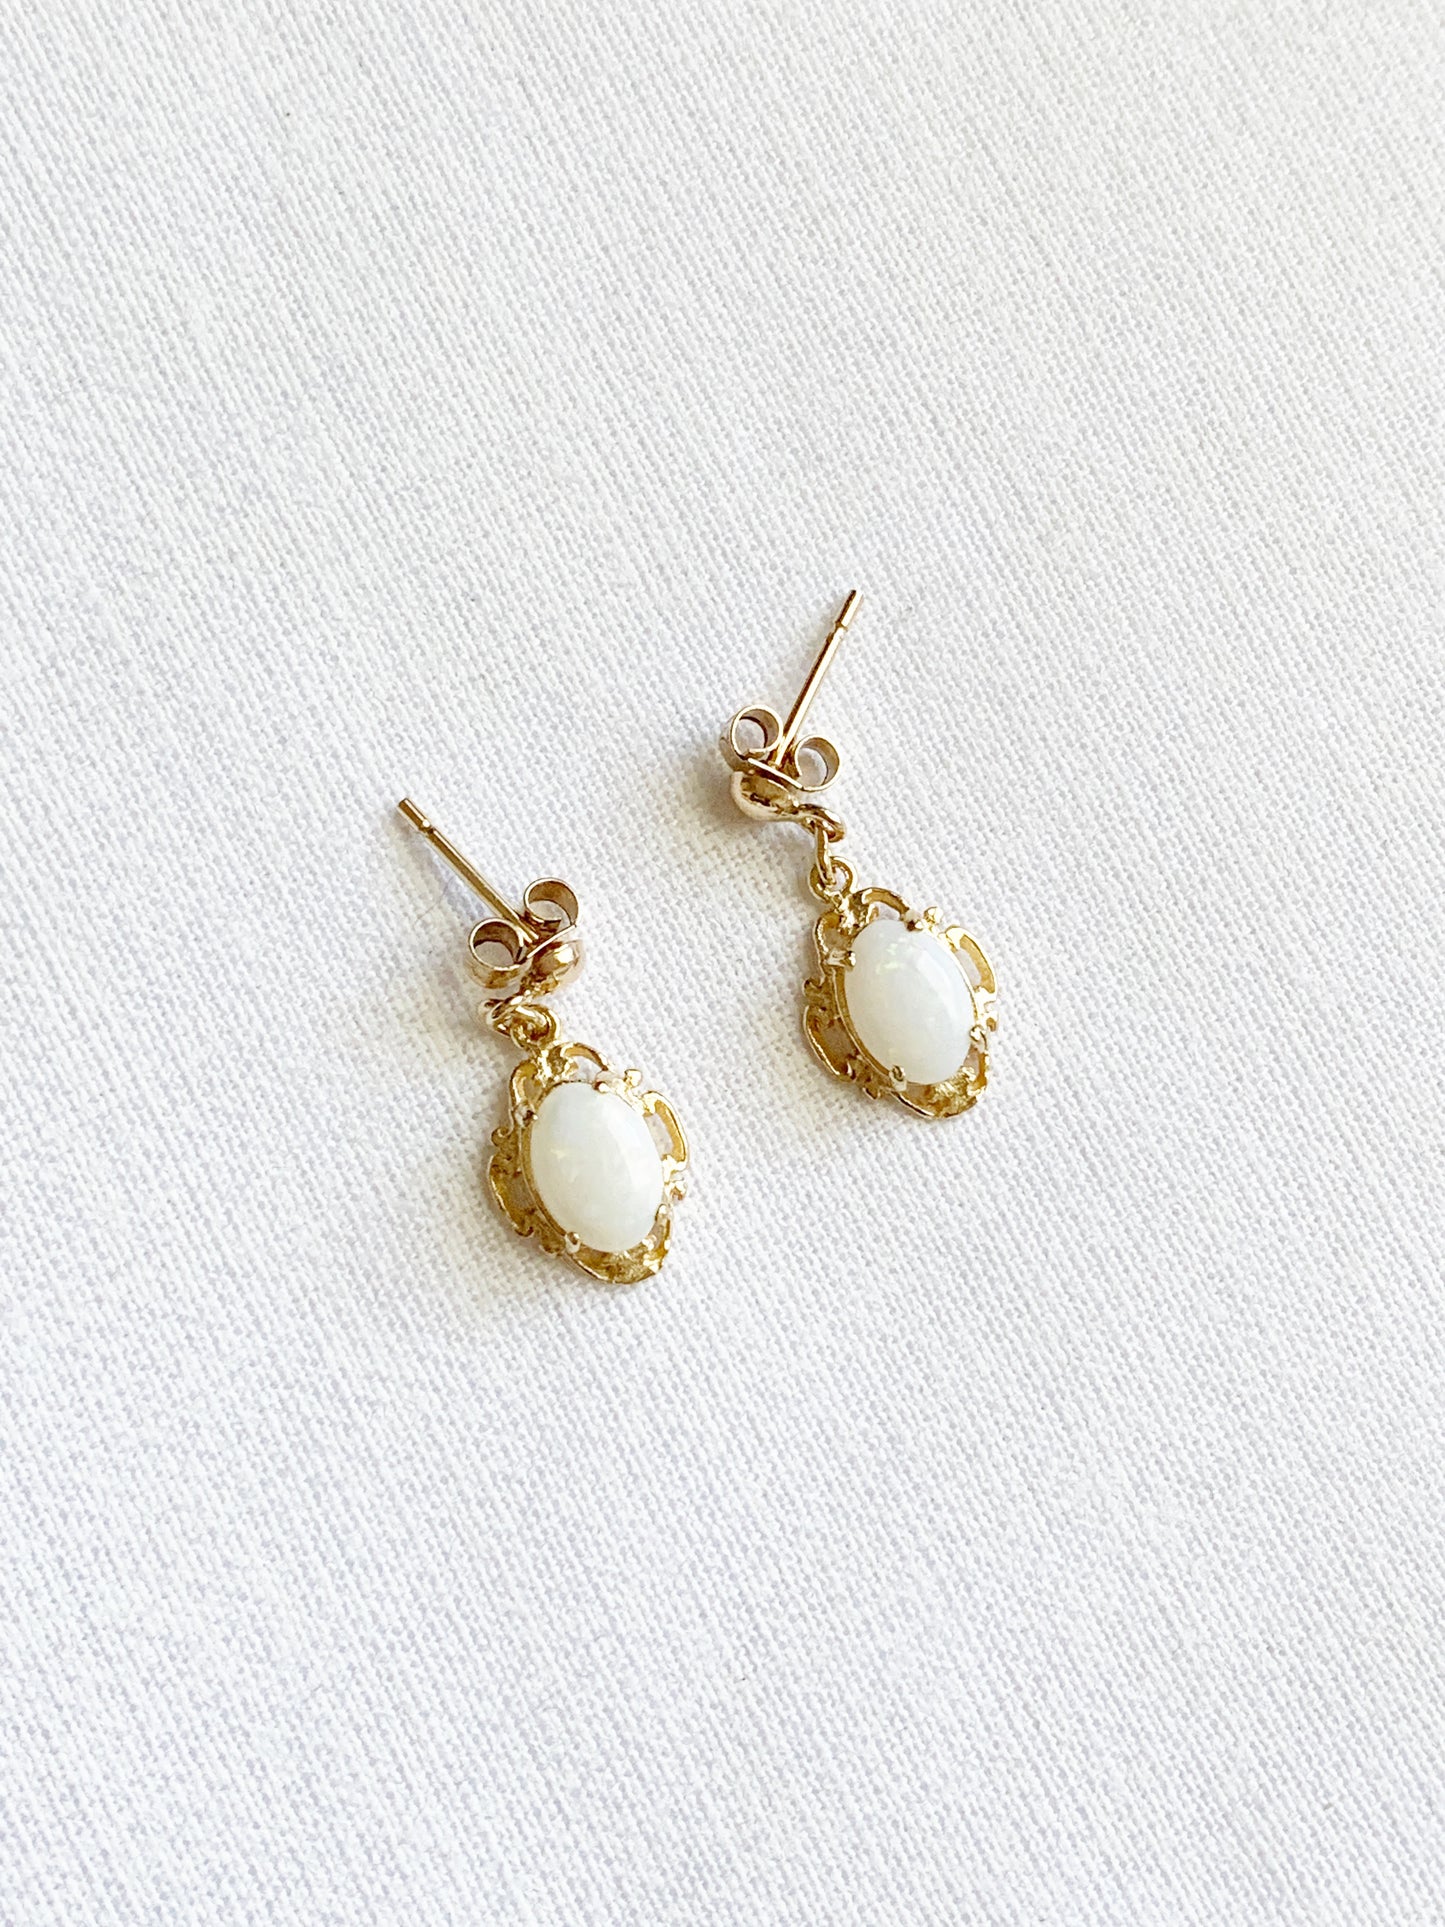 Vintage 9ct Gold Opal Dangle Earrings